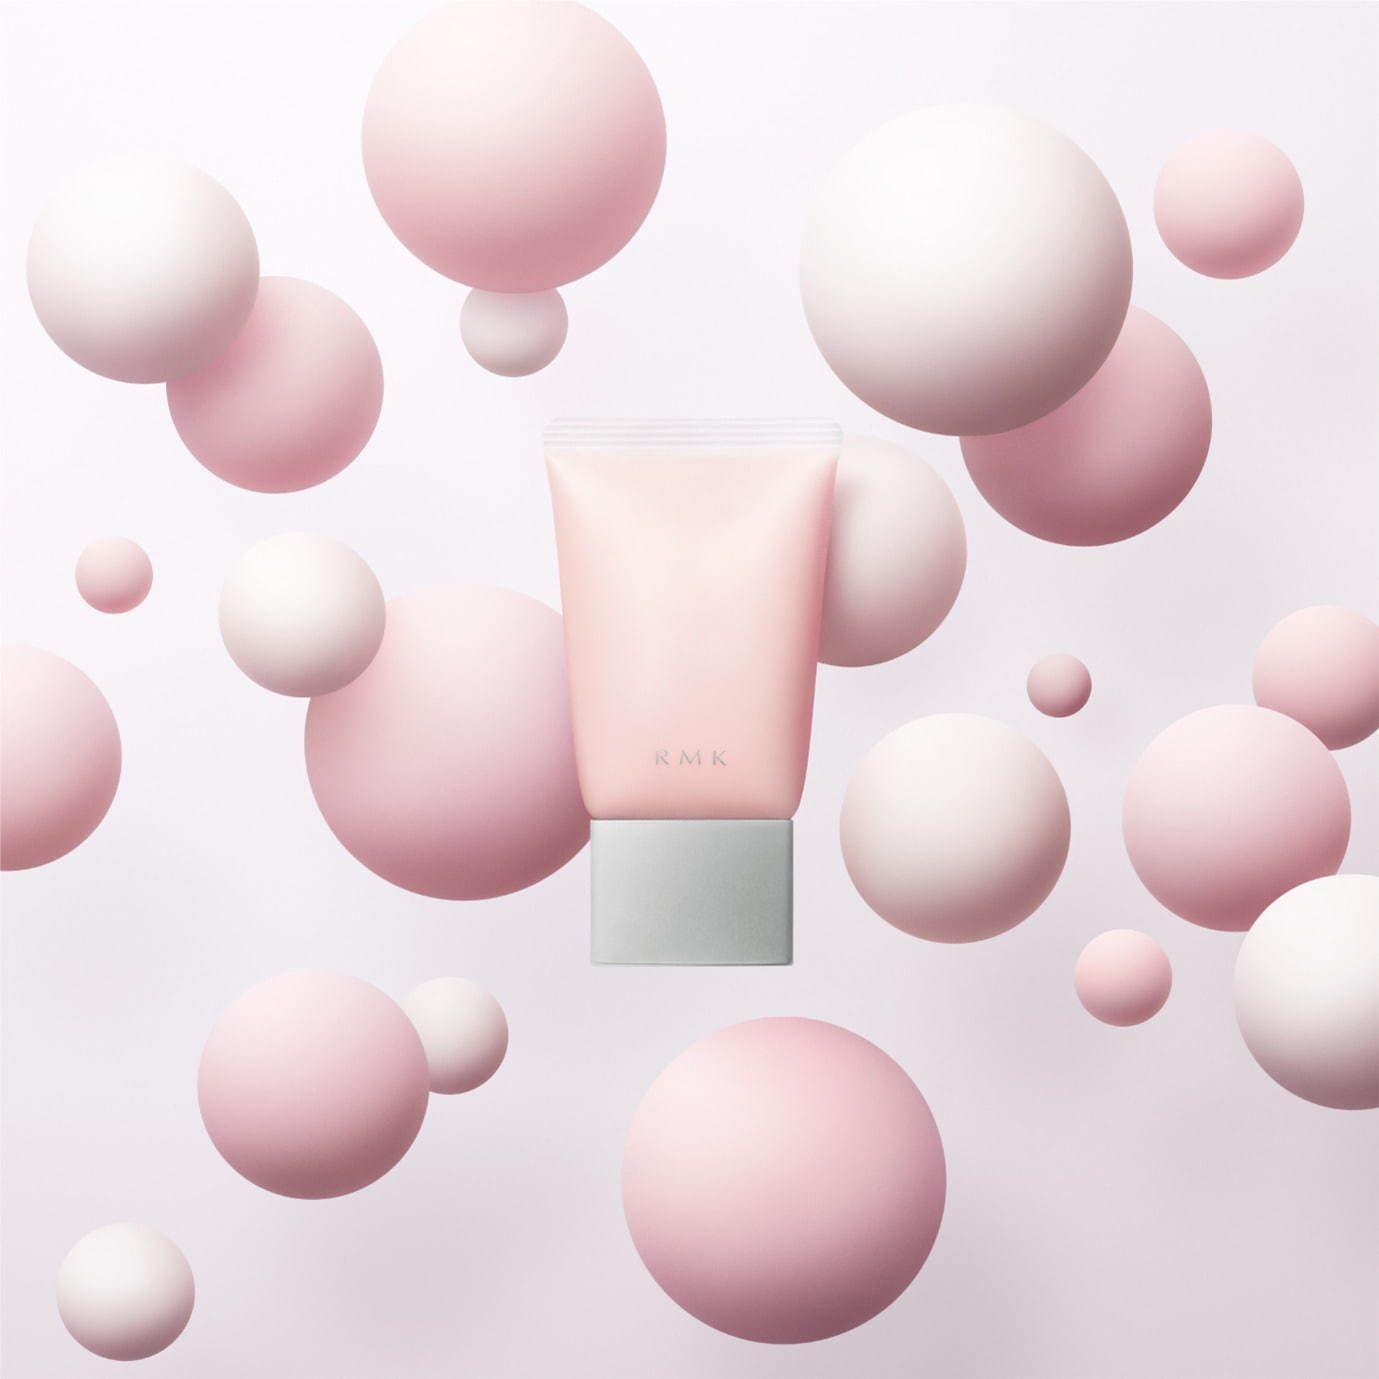 RMK“陶器肌”を叶える化粧下地に新色、ふんわりピンク＆パール煌めく 